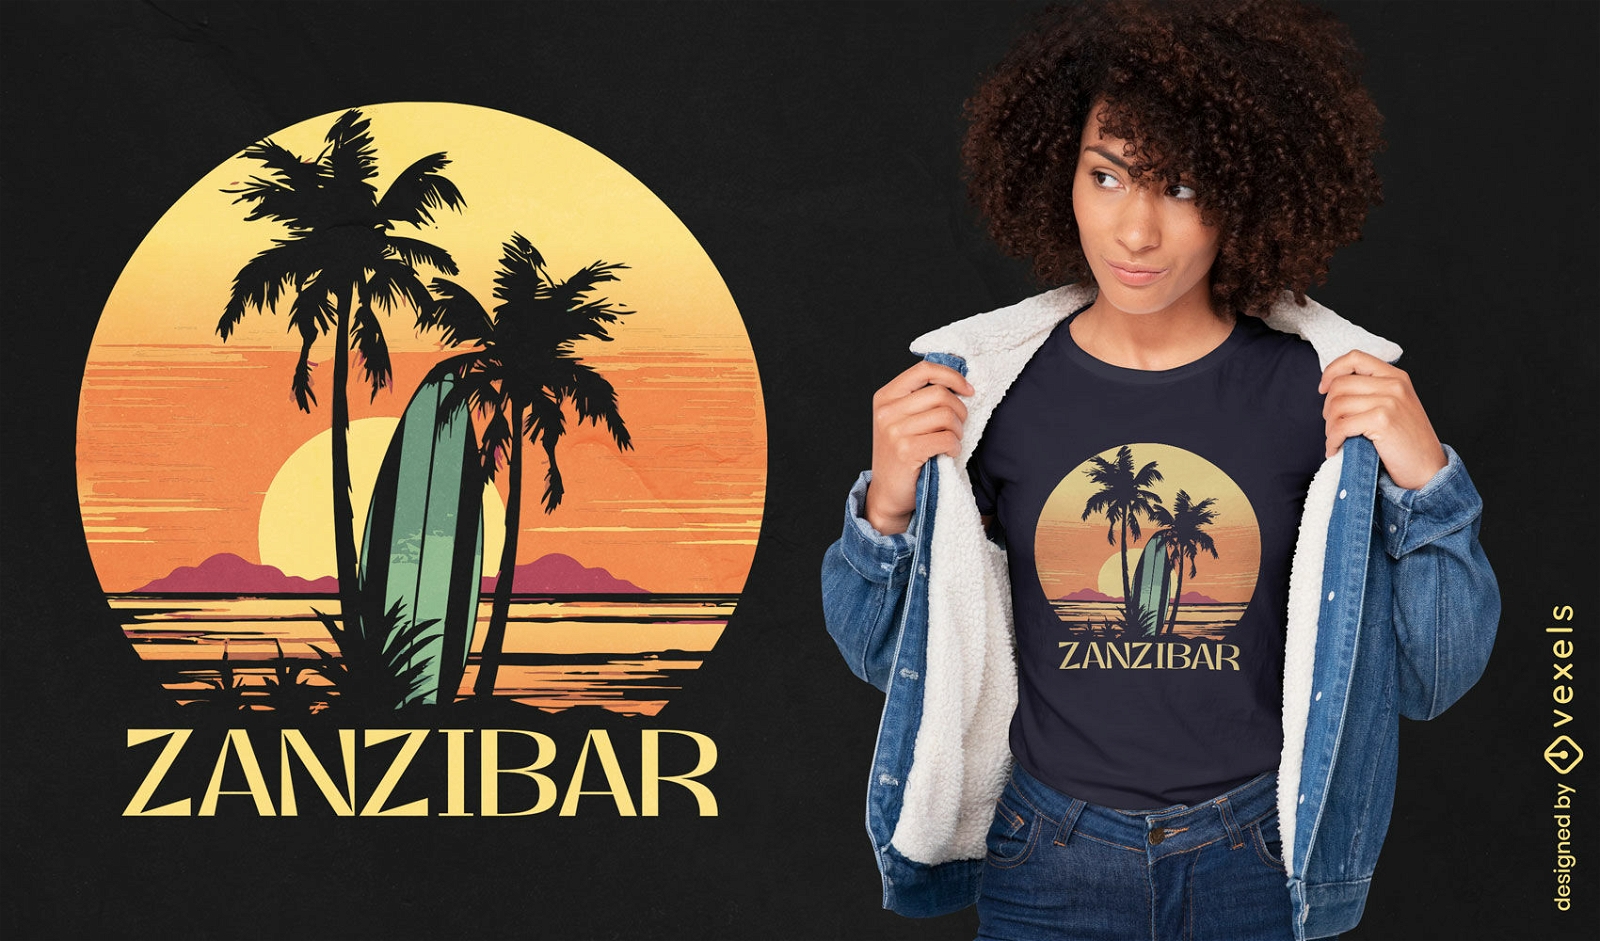 Zanzibar surfer t-shirt design